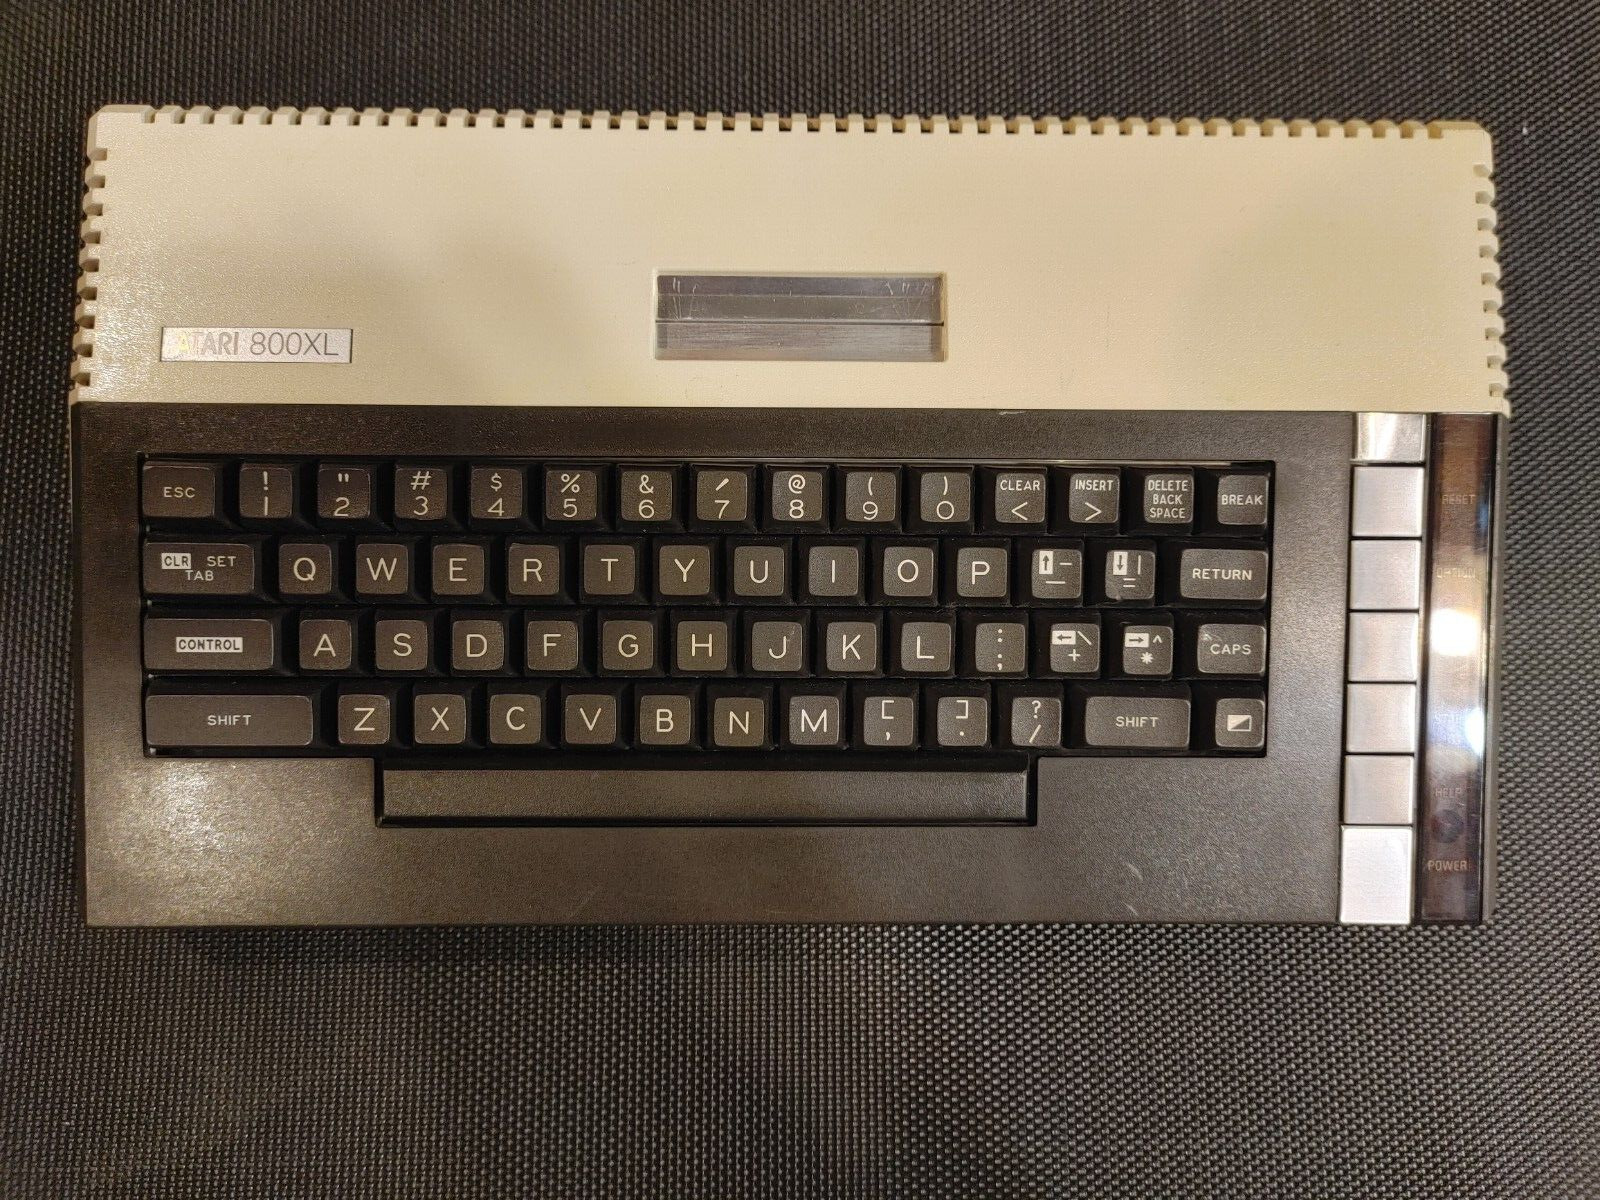 Atari 800XL Computer with Video, RAM, and OS Upgrades